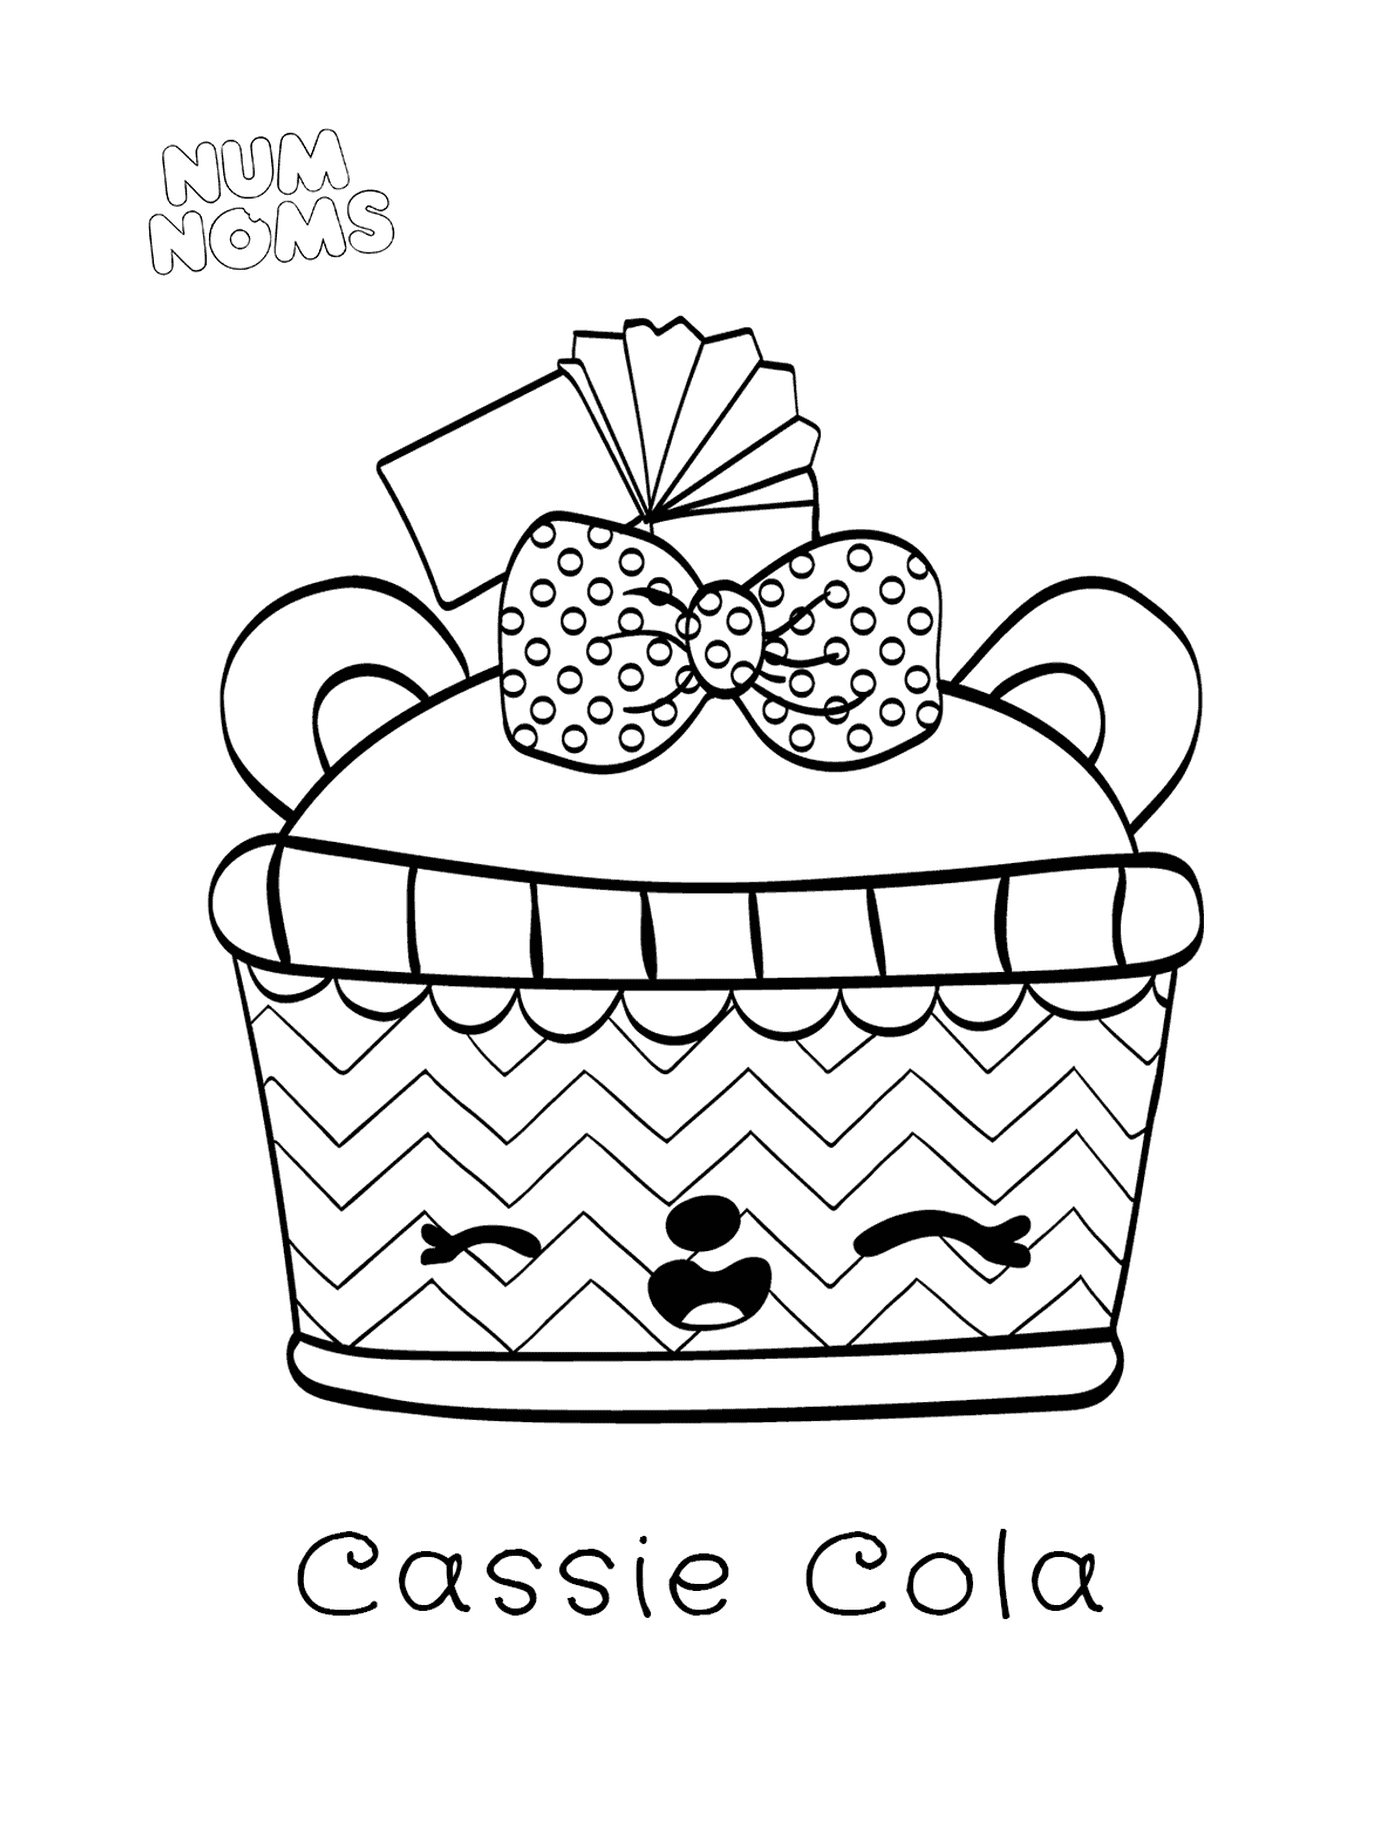  Disegno da colorare Nomi Num Cassie Cola 